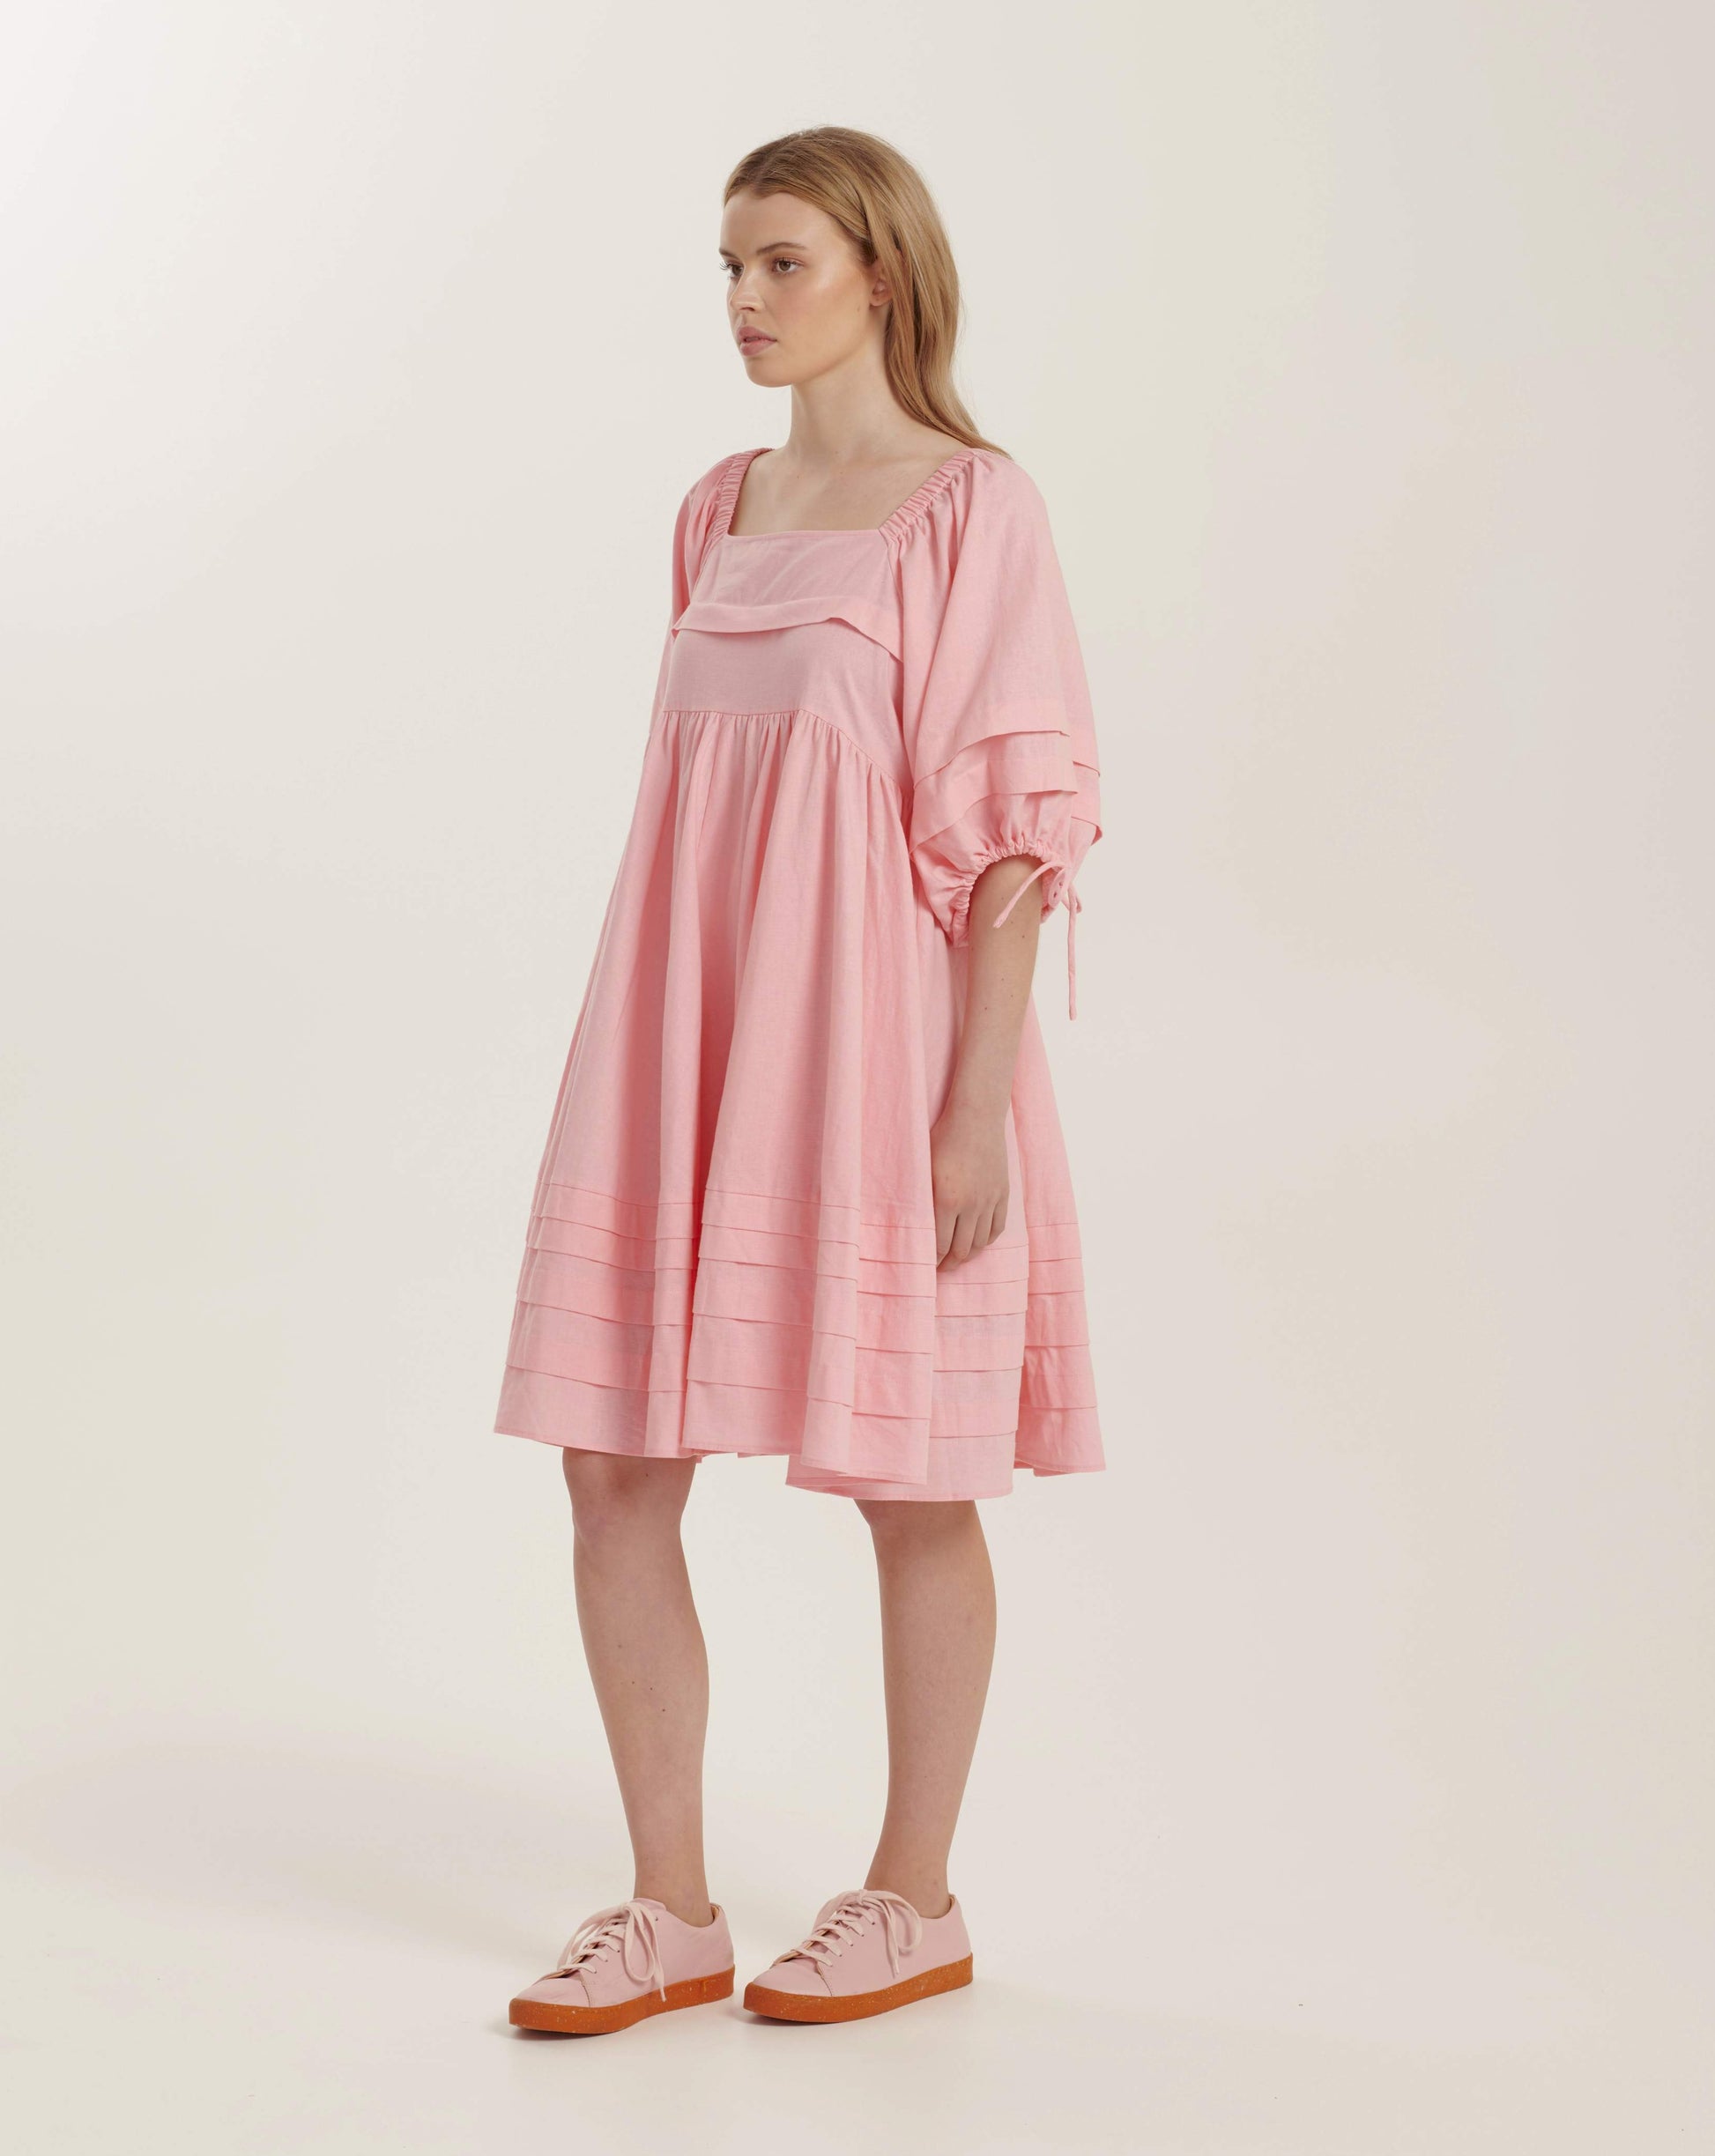 Voluminous linen dress with pleat bottom